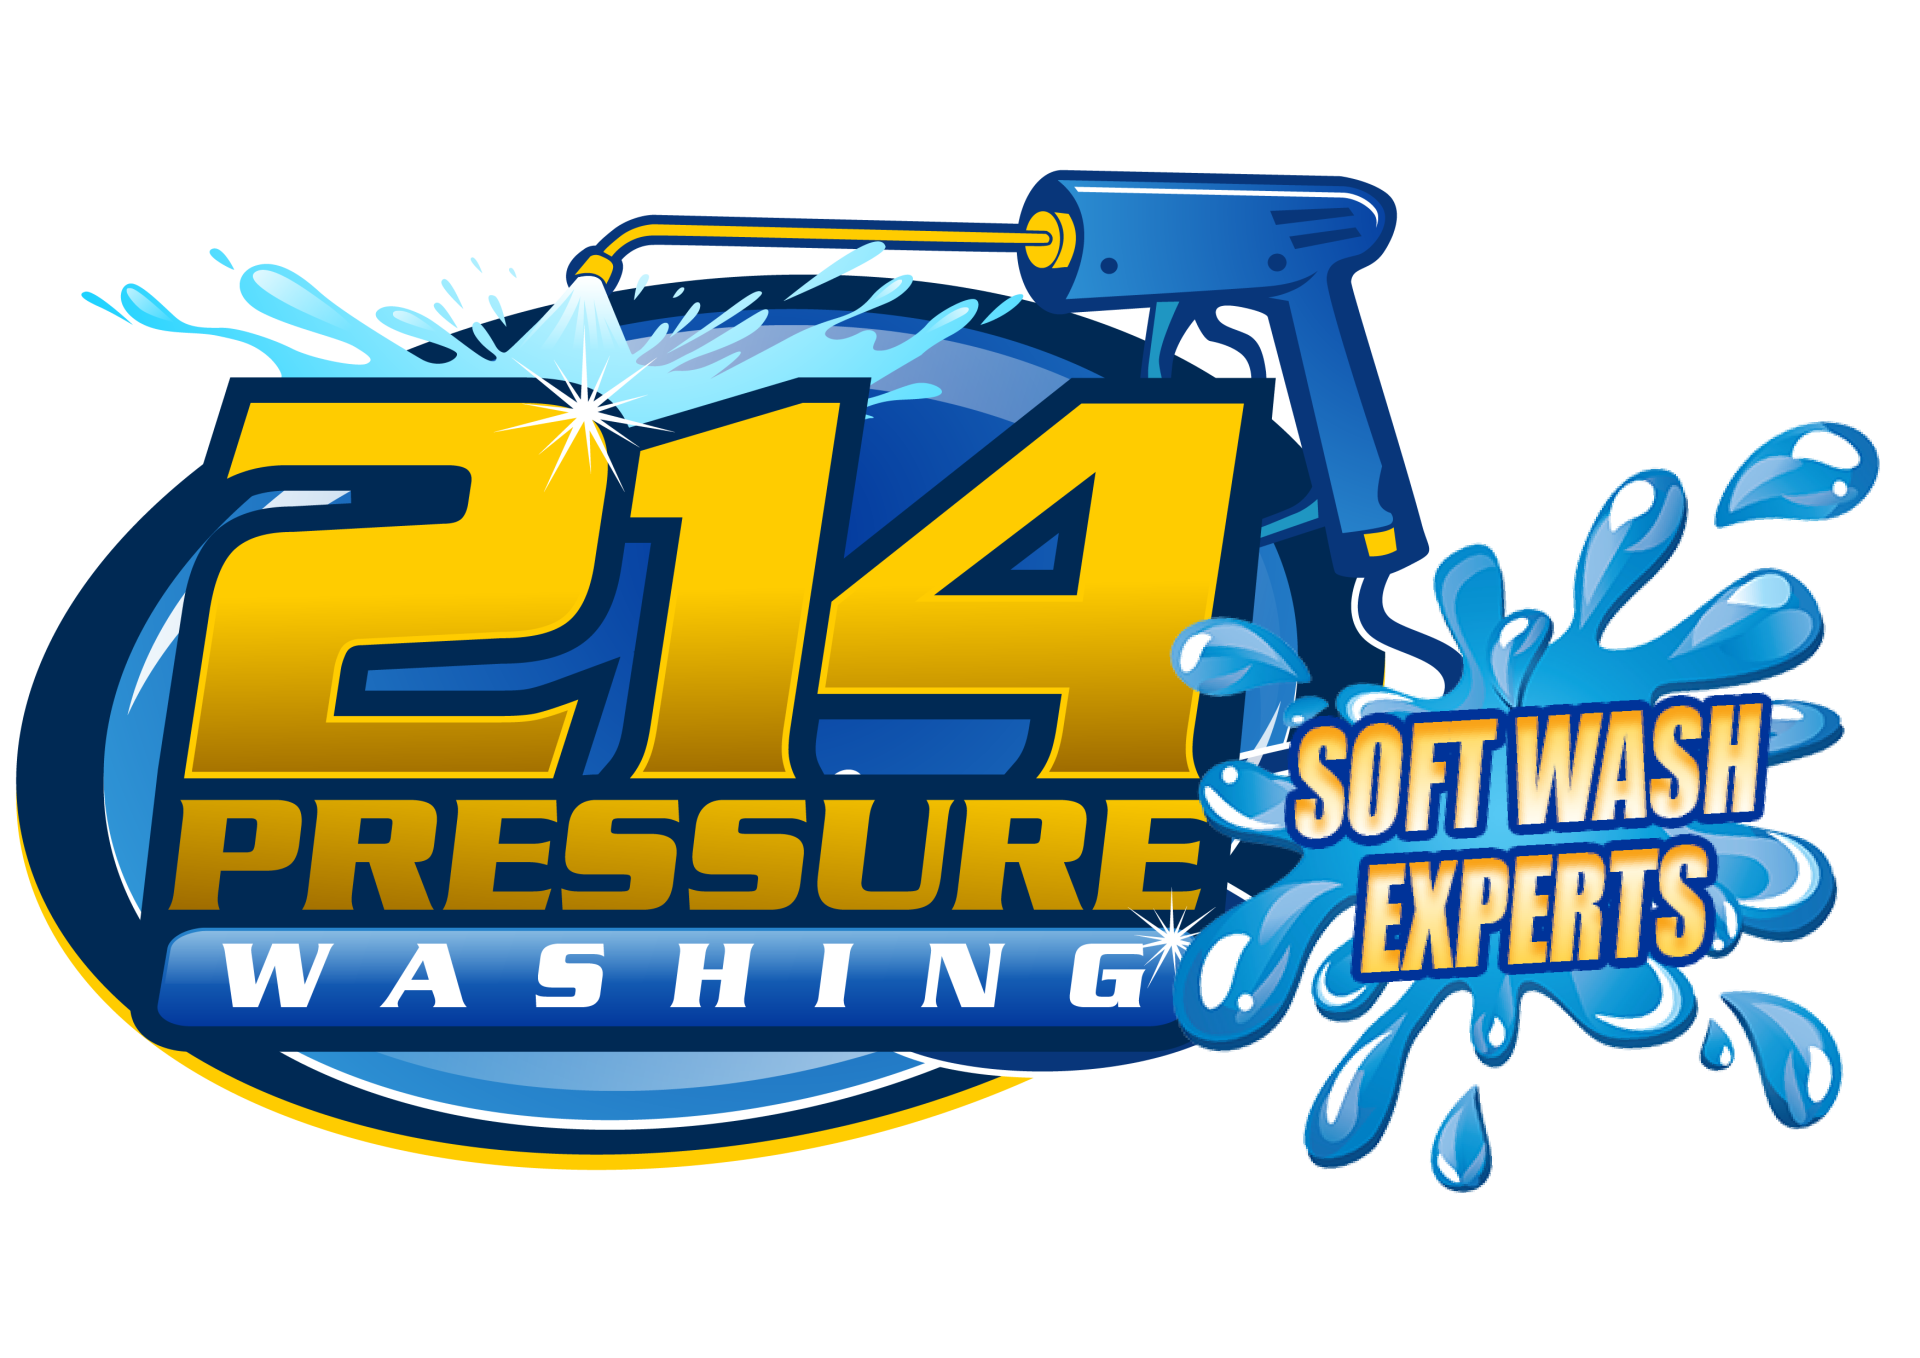 pressure washing logo ideas 5